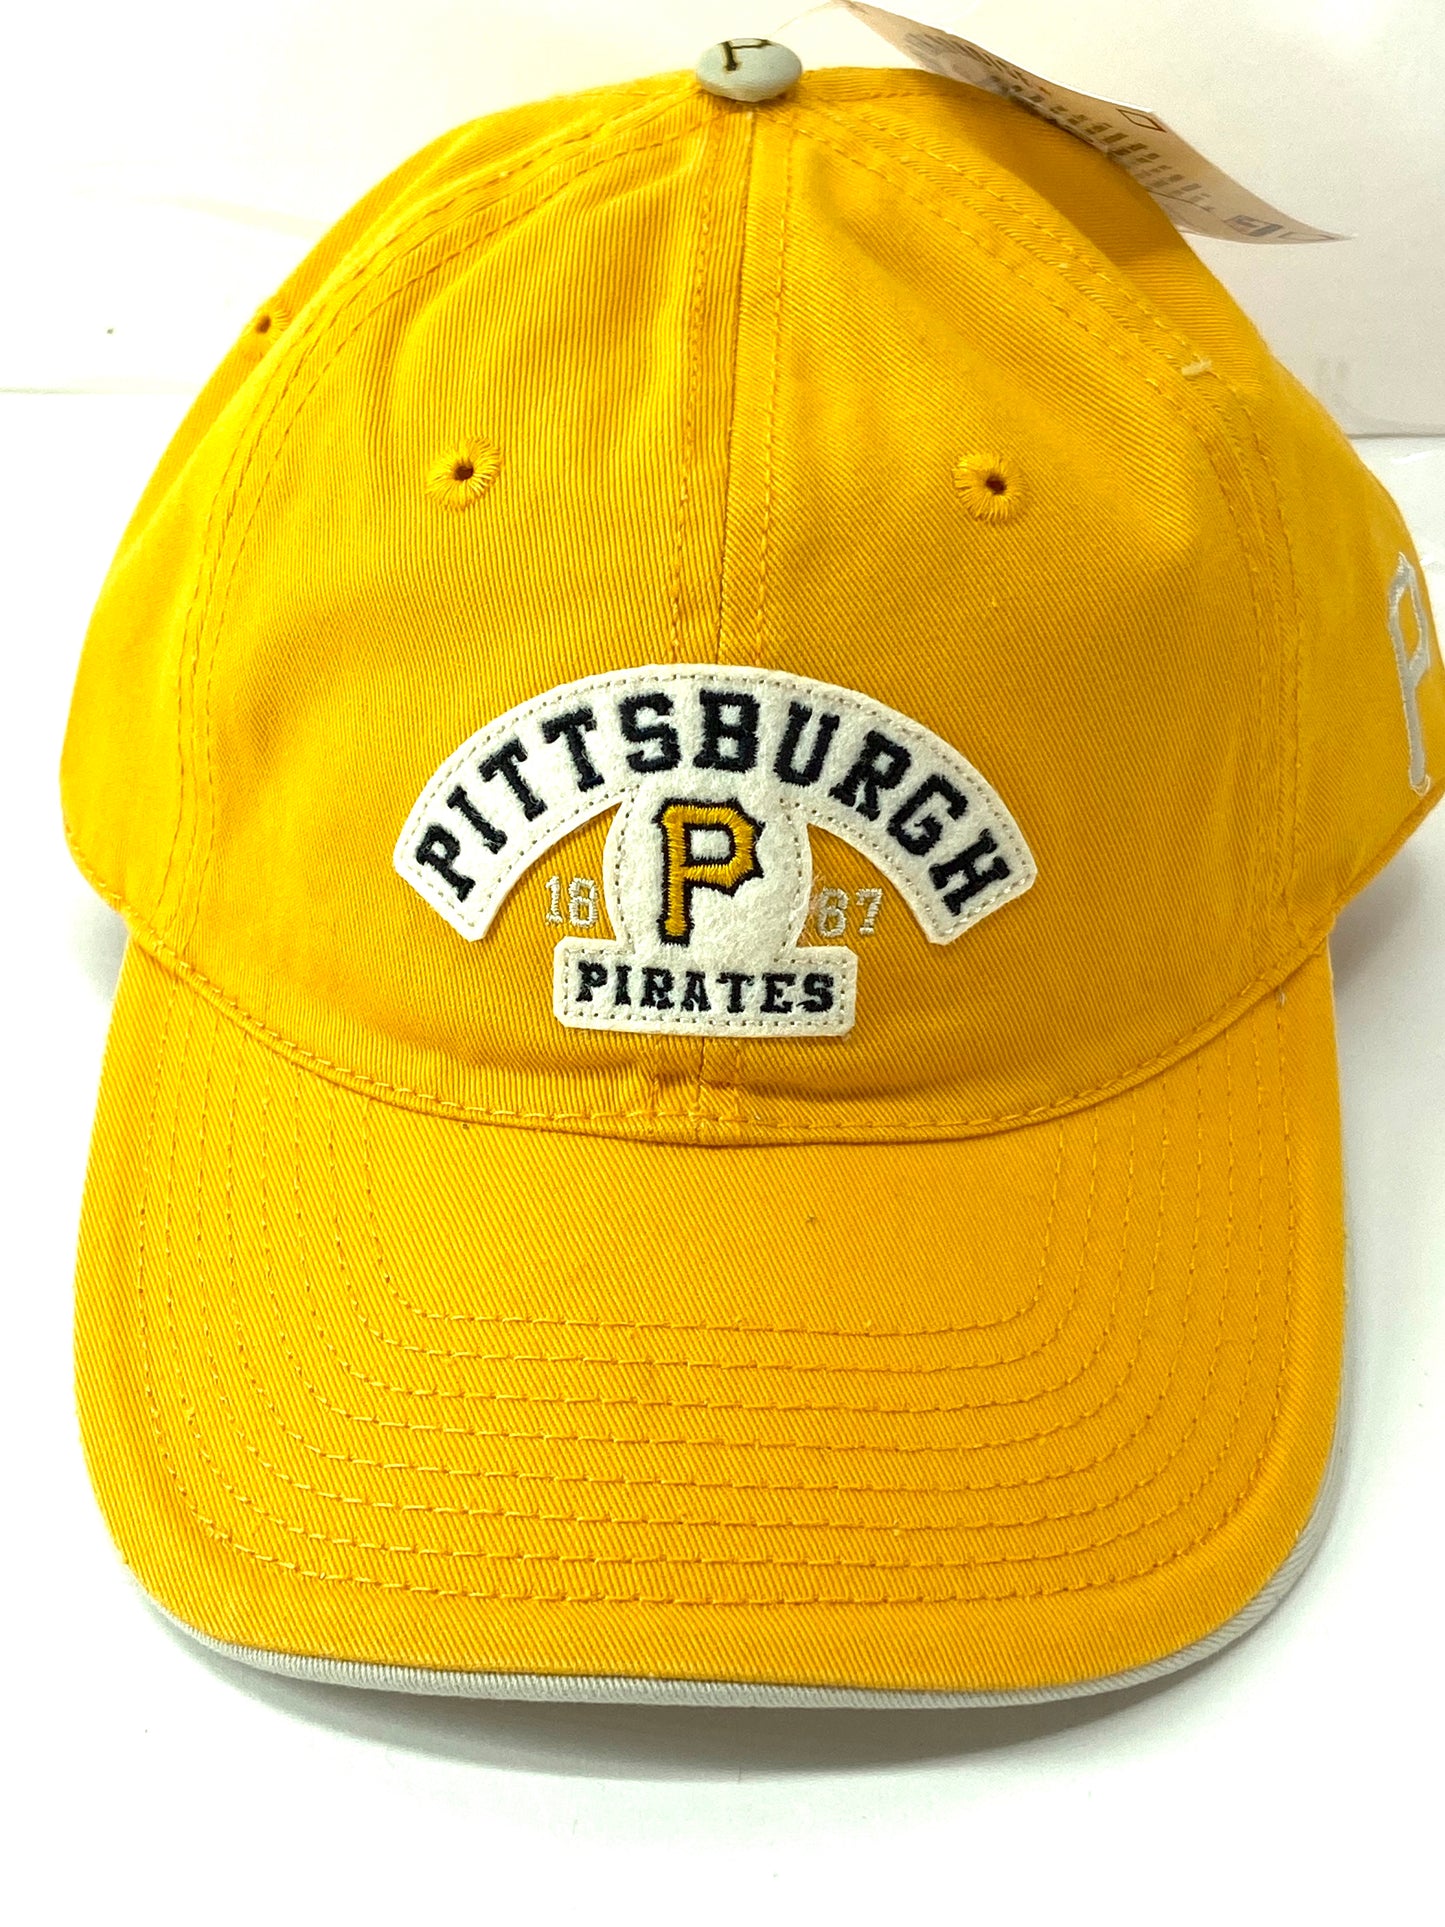 Pittsburgh Pirates MLB Vintage "Legend" Ball Cap NOS by Drew Pearson Marketing